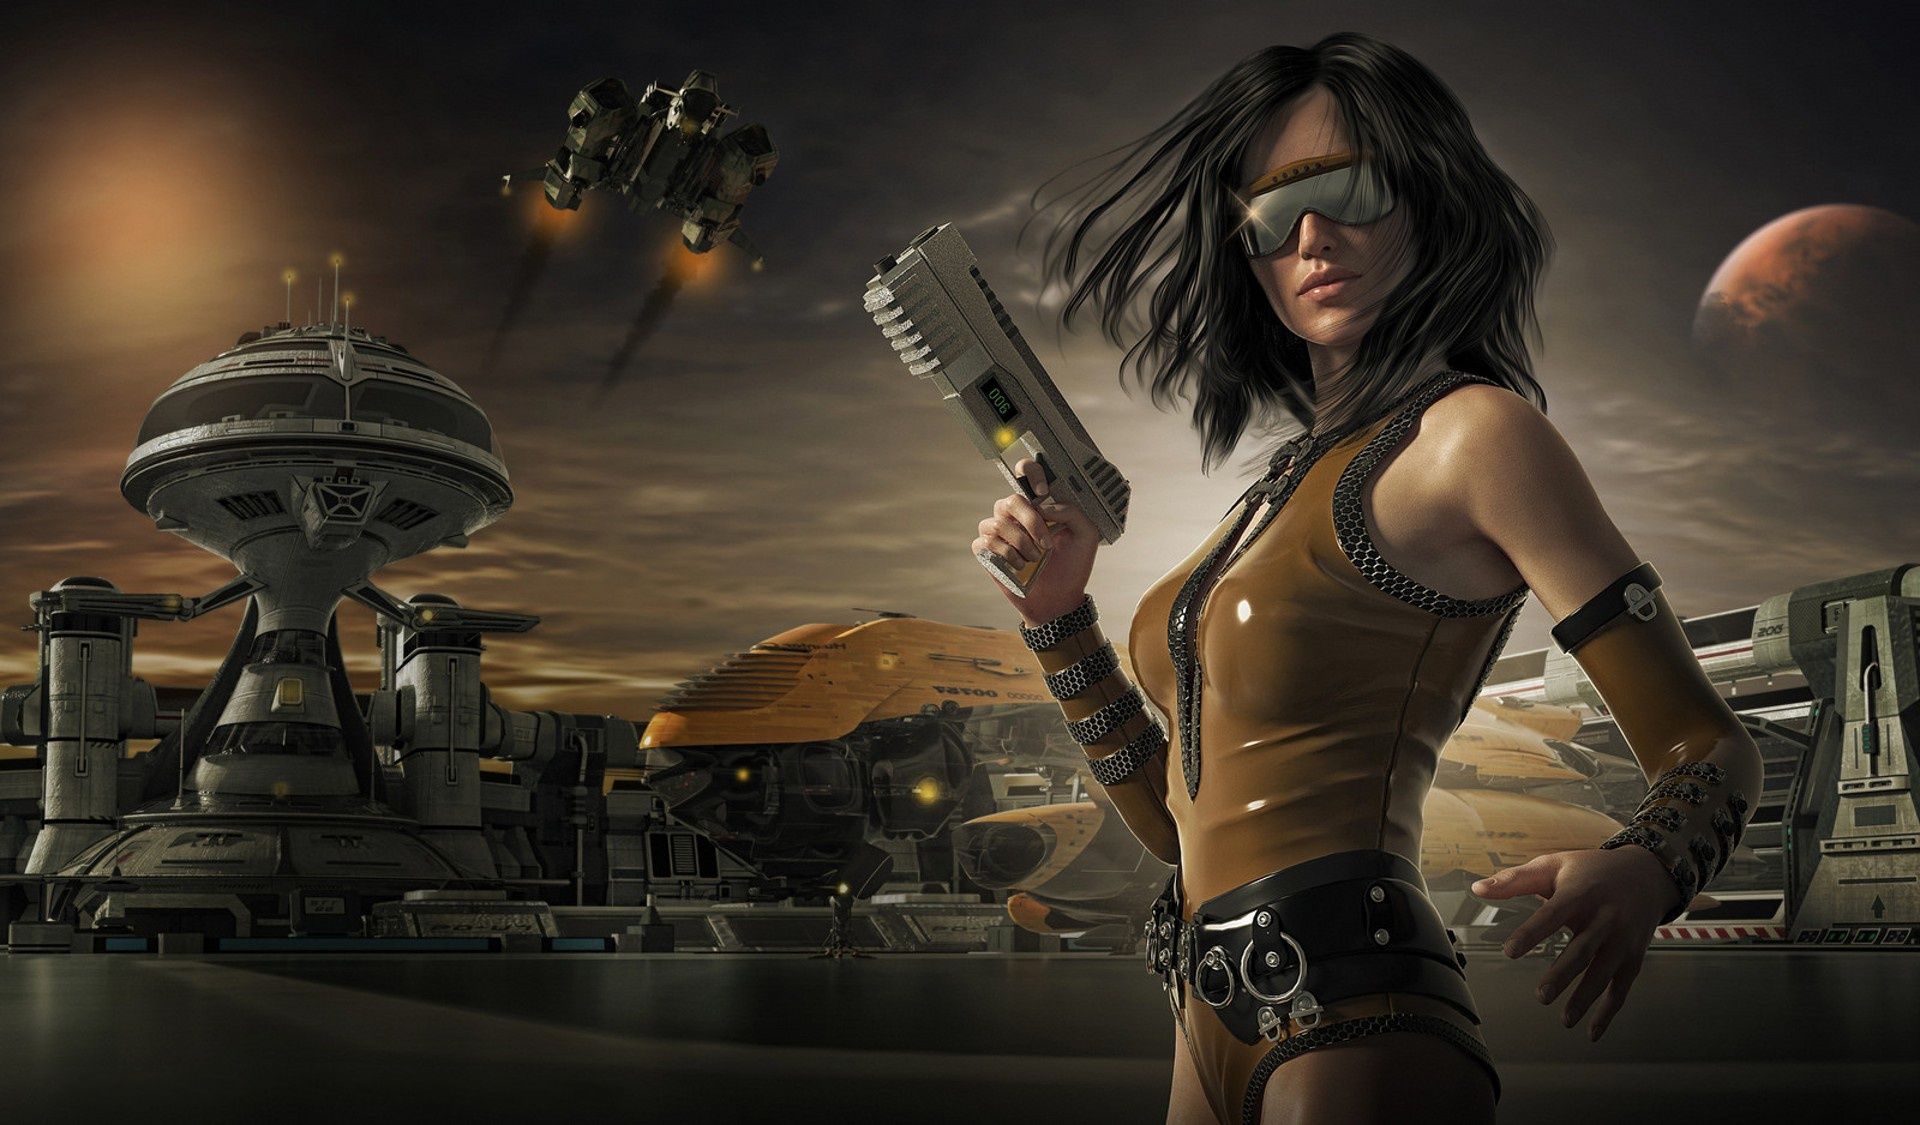 Scifi Sunglasses Woman Warrior With Guns, HD Fantasy Girls, 4k